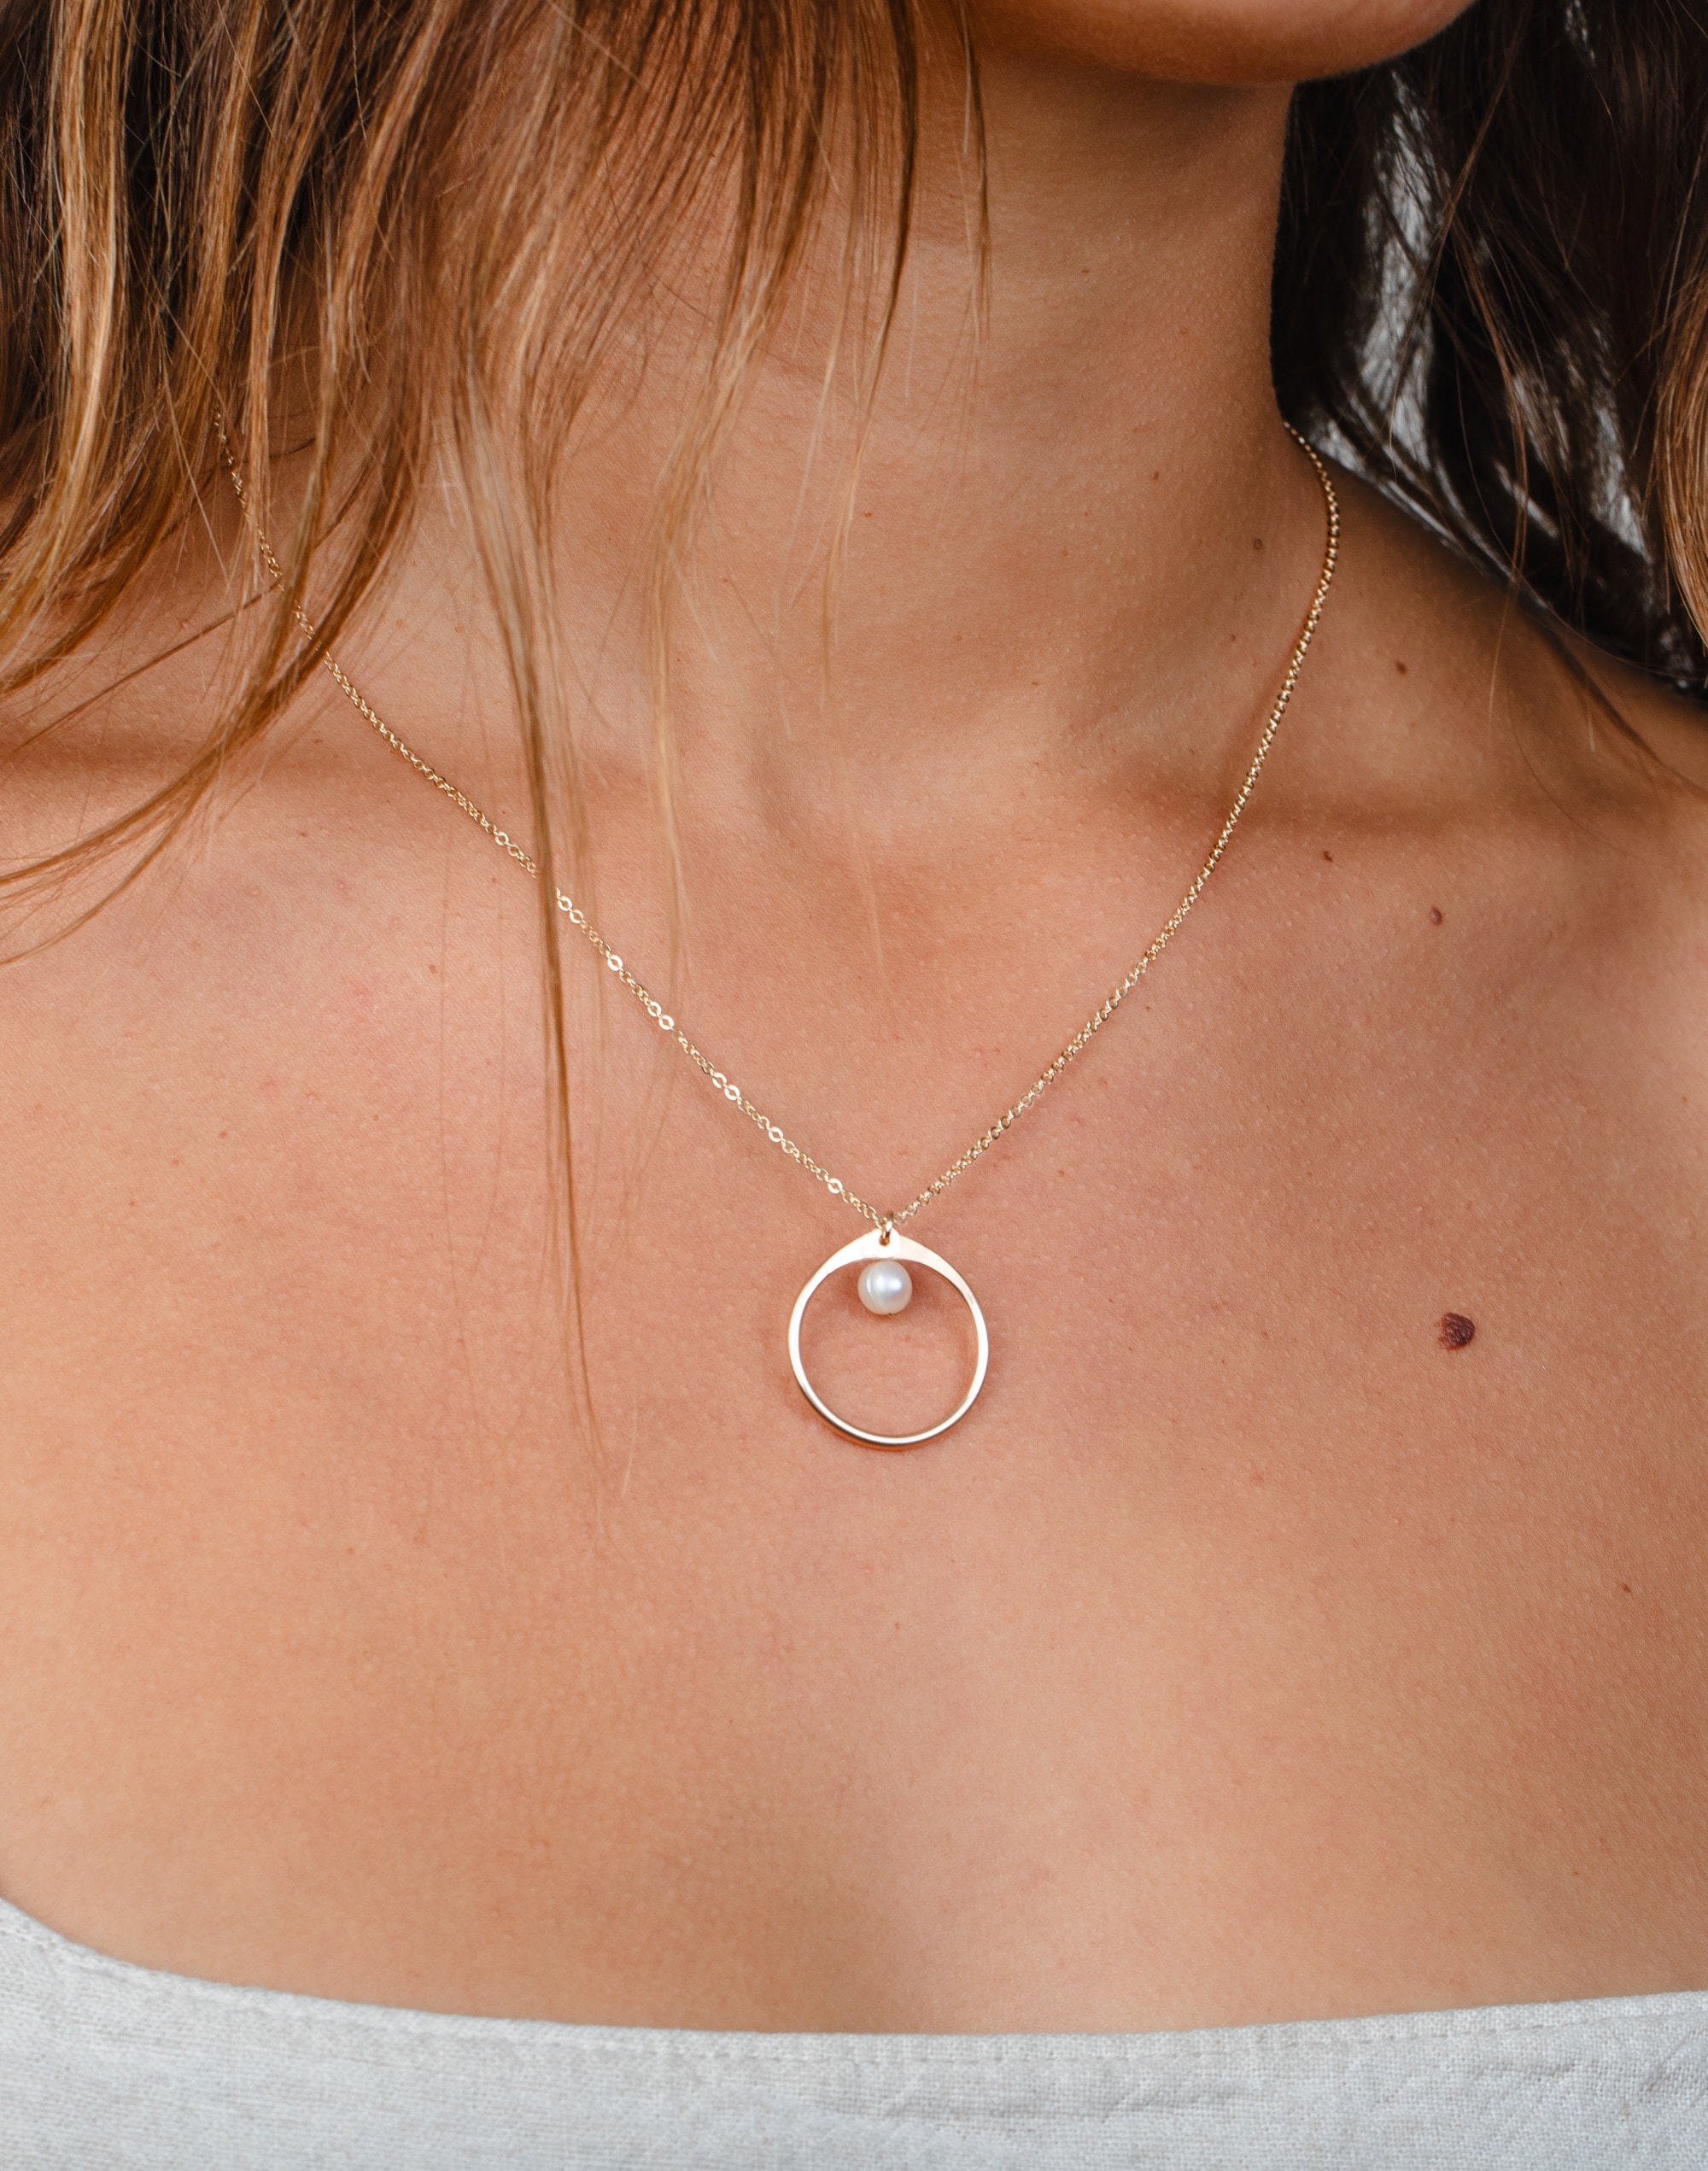 In Situ Jewelry 14k Gold-Filled Kone Pearl Necklace